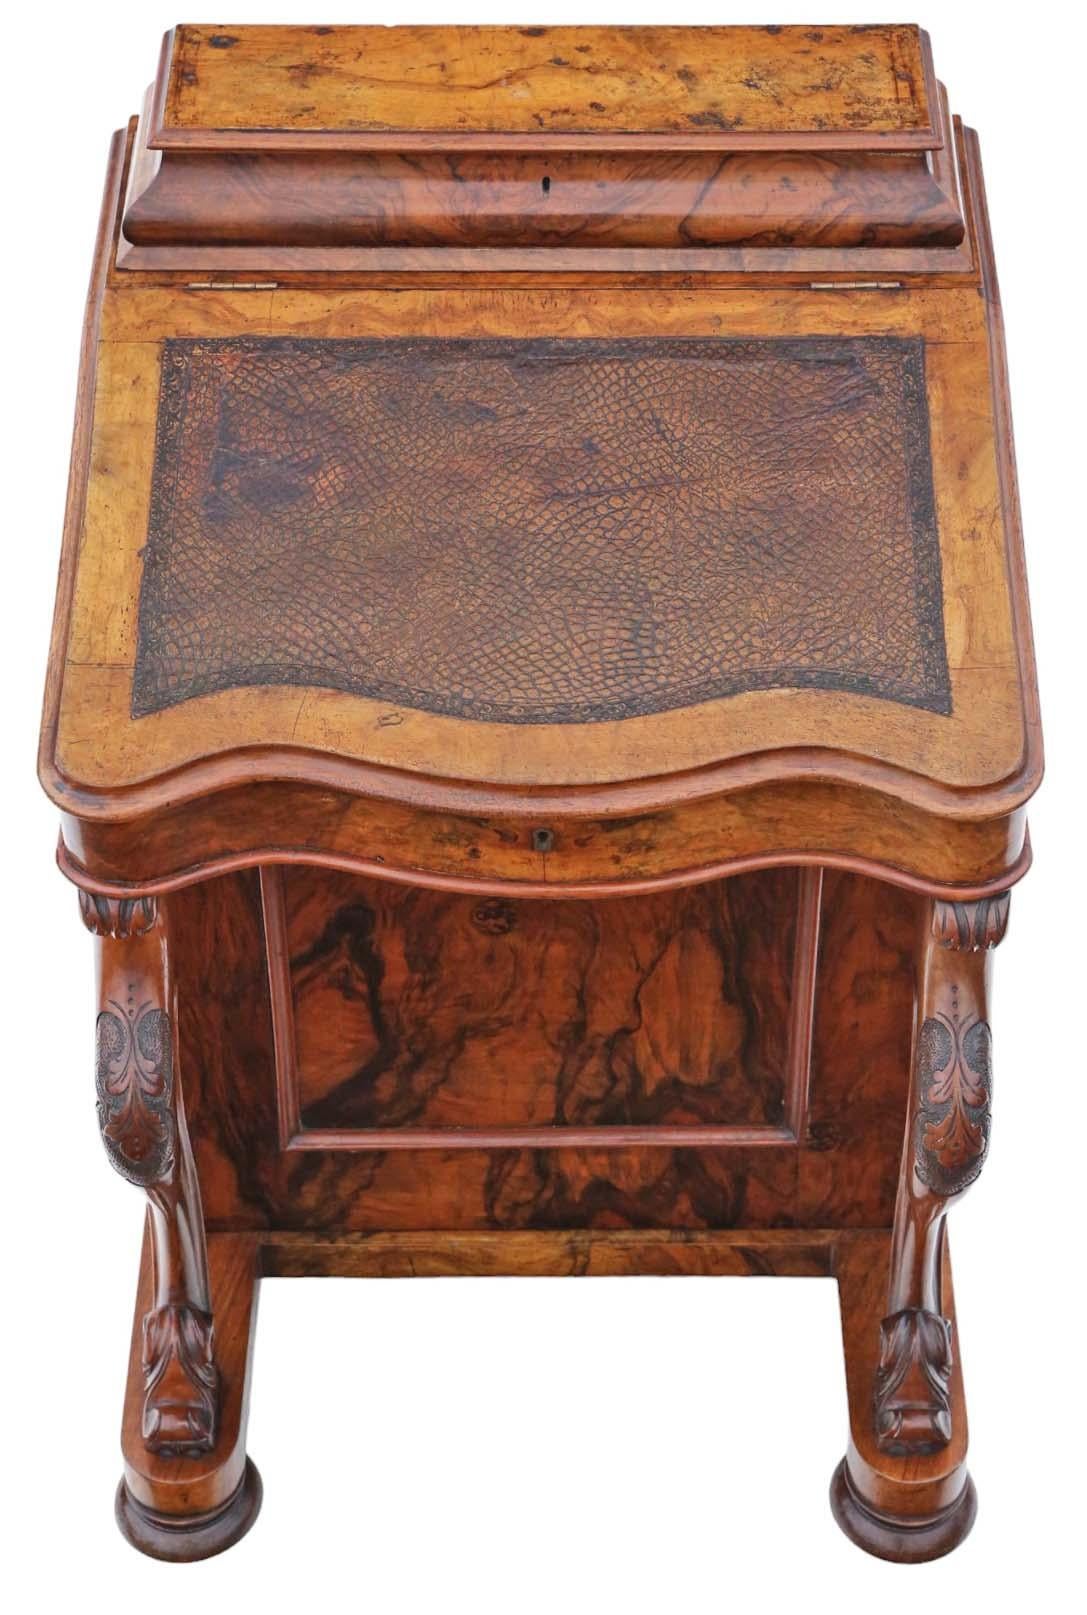 British Victorian Burr Walnut Davenport Writing Table Desk - C. 1870 For Sale